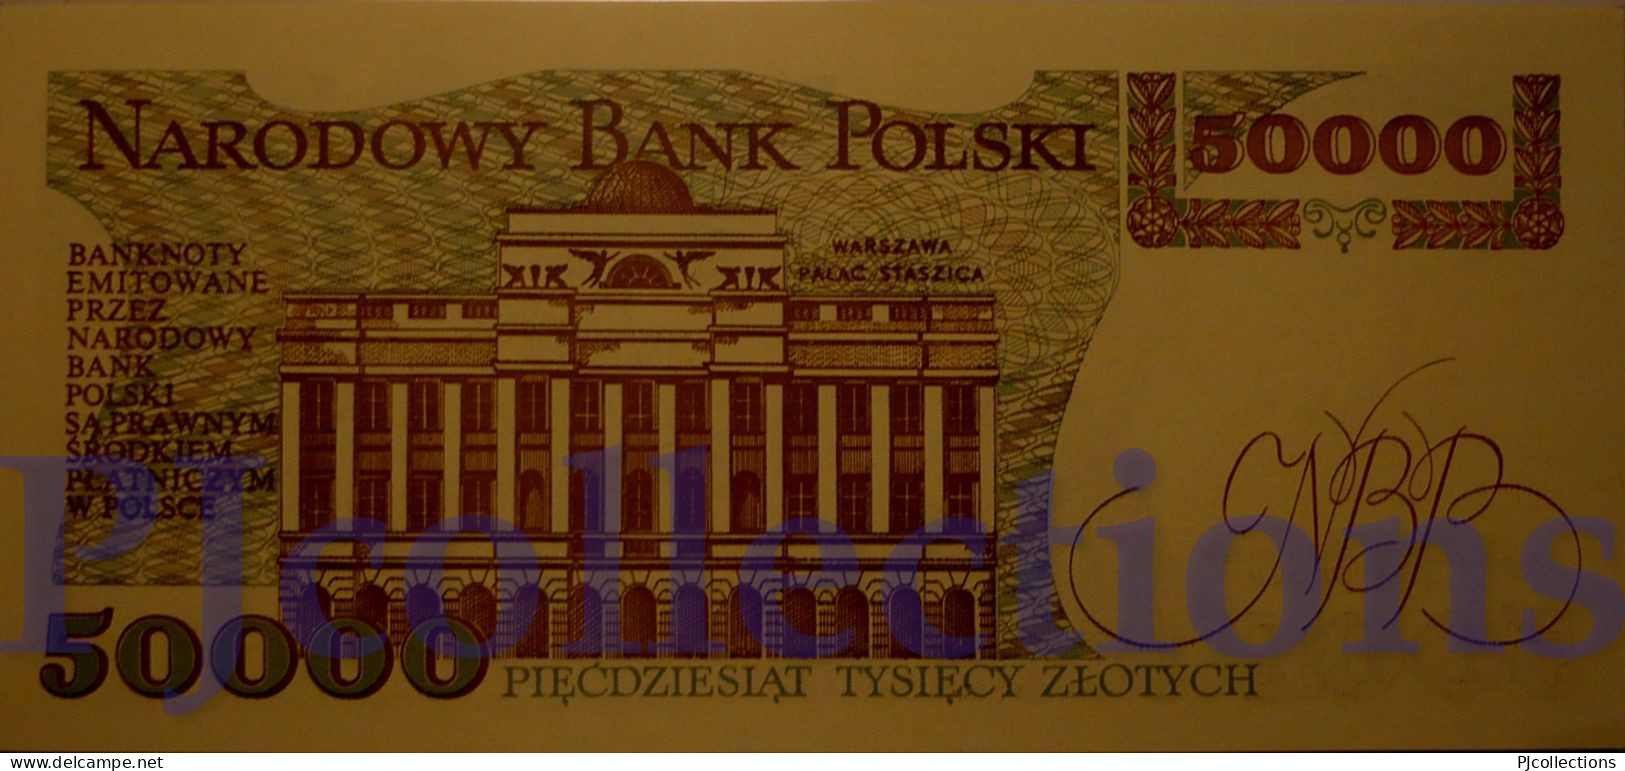 POLONIA - POLAND 50000 ZLOTYCH 1989 PICK 153a UNC PREFIX "A" RARE - Poland